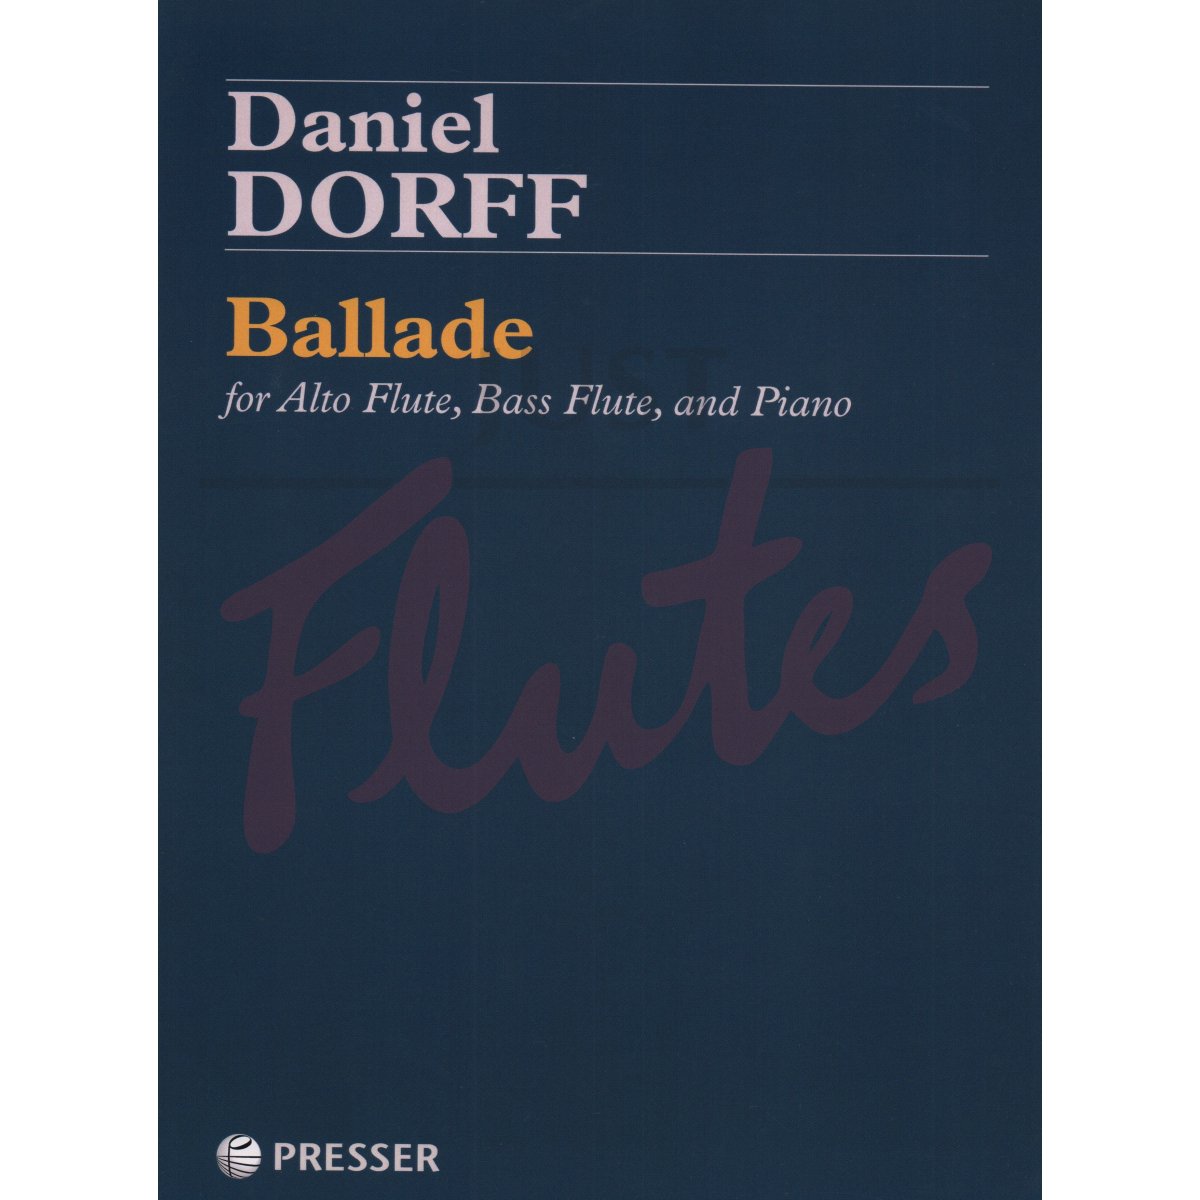 Ballade for Alto Flute, Bass Flute, and Piano